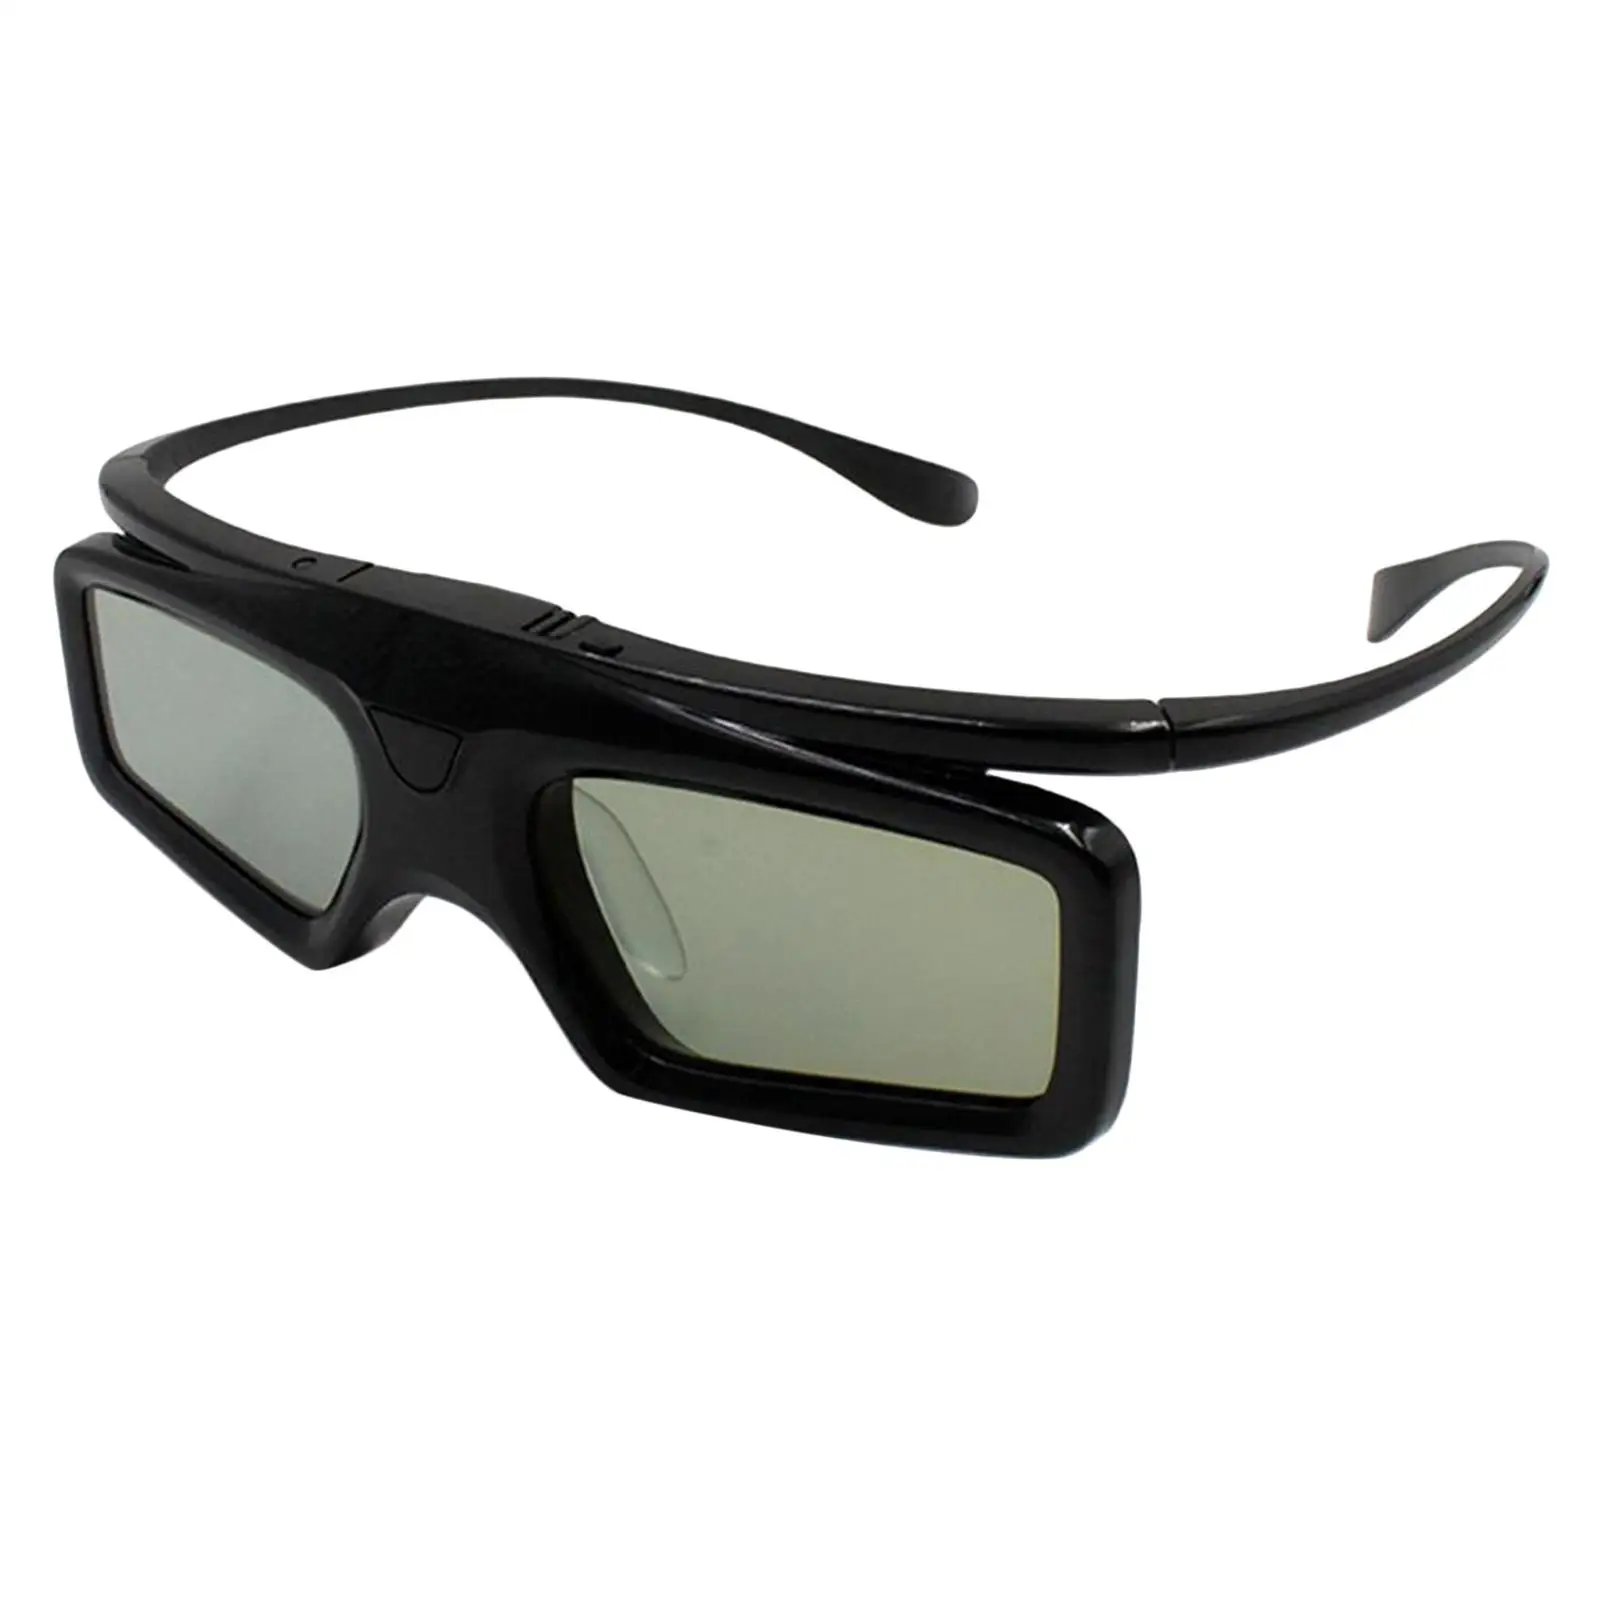 DLP Link 3D Glasses Active Shutter Rechargeable for All DLP Link 3D